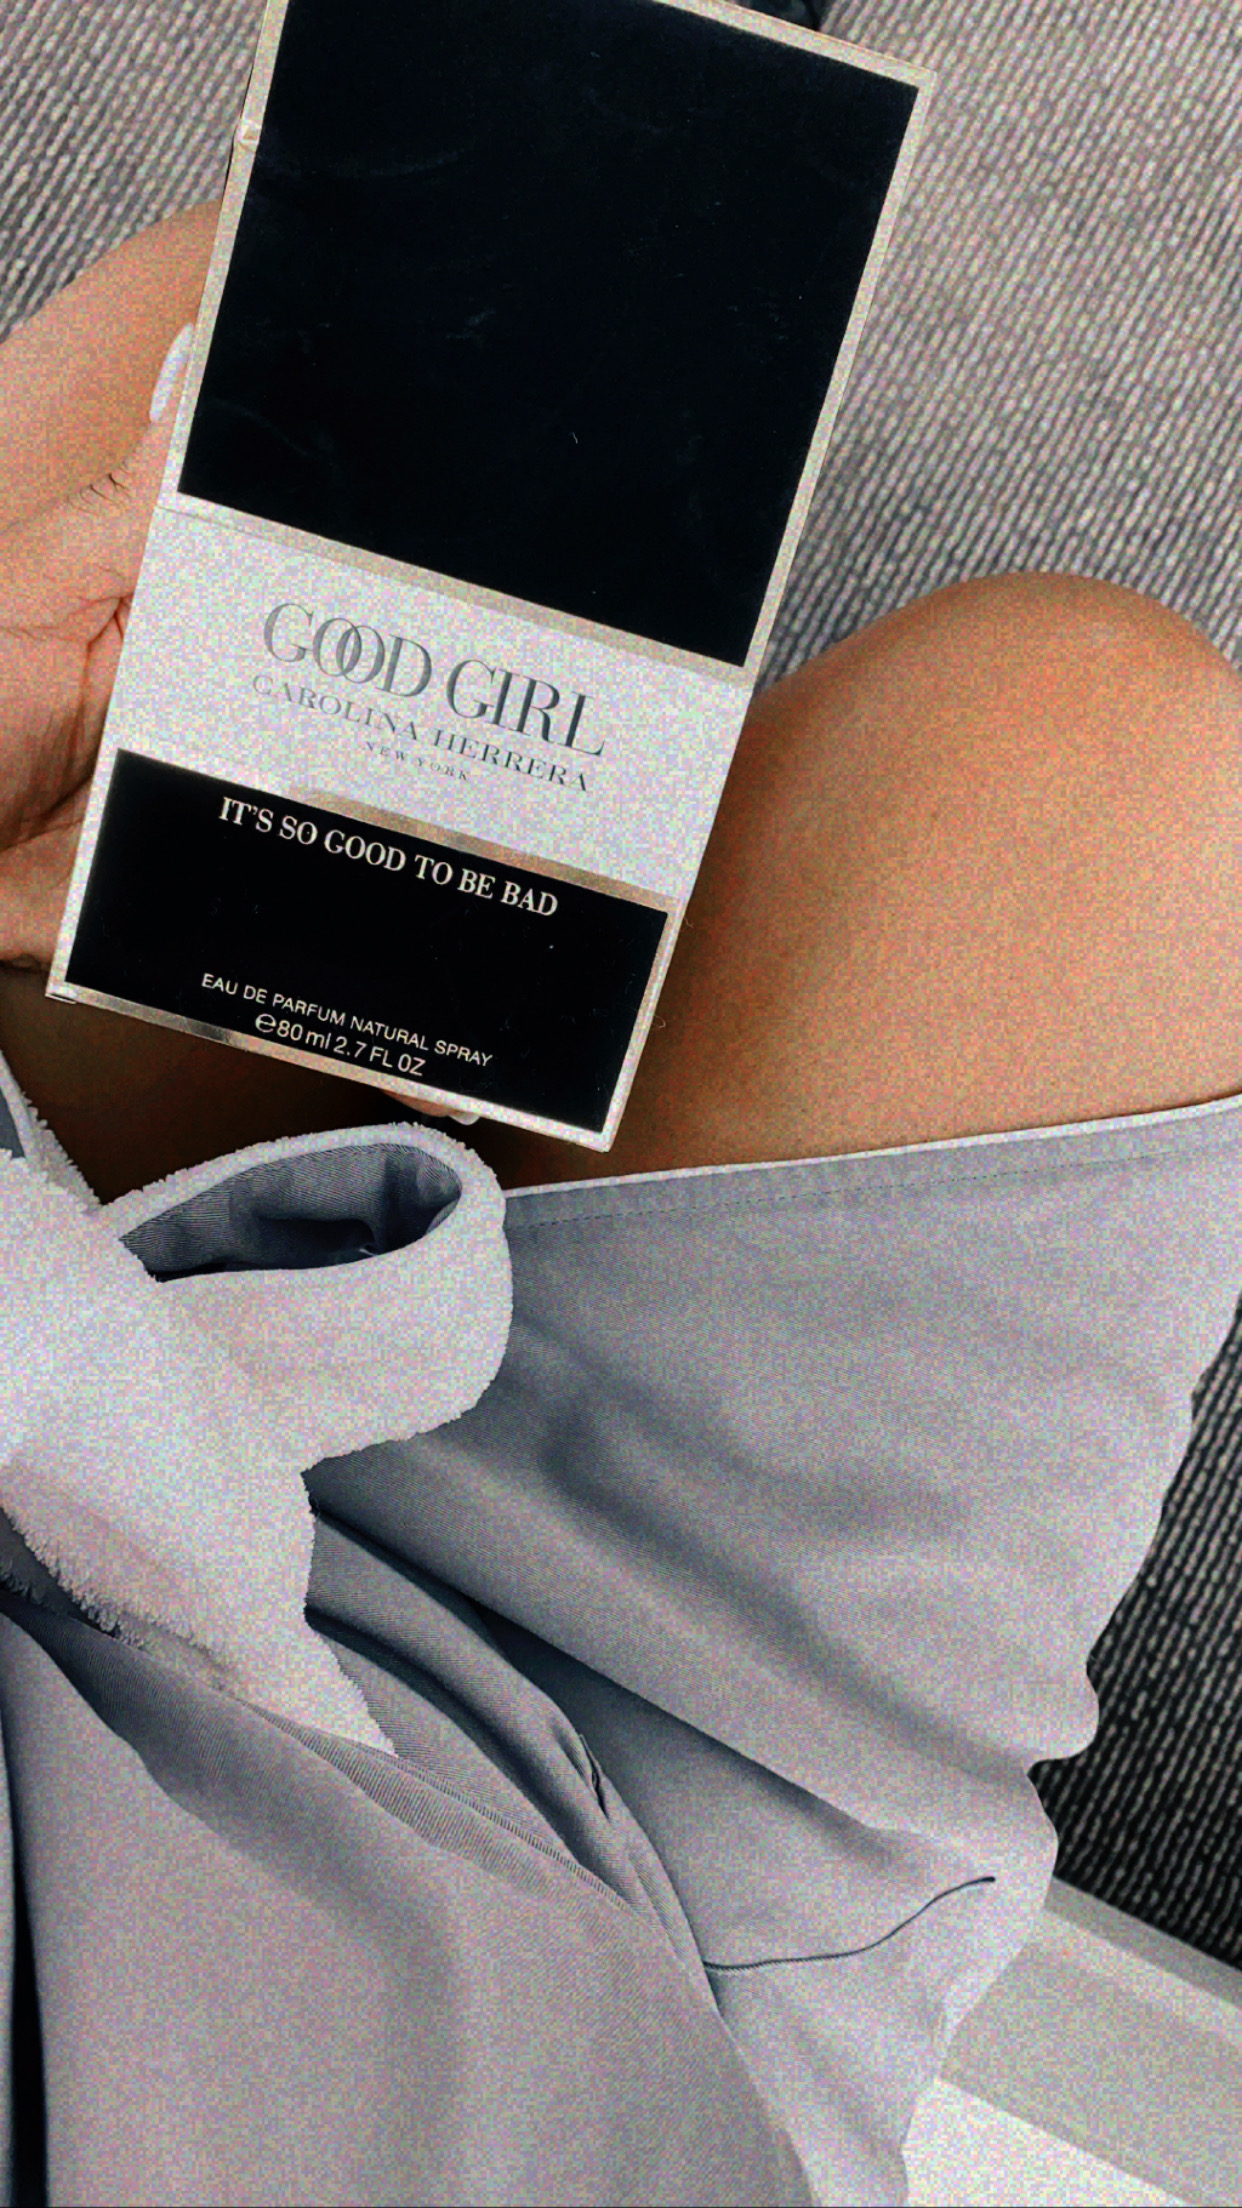 Good girl perfume 